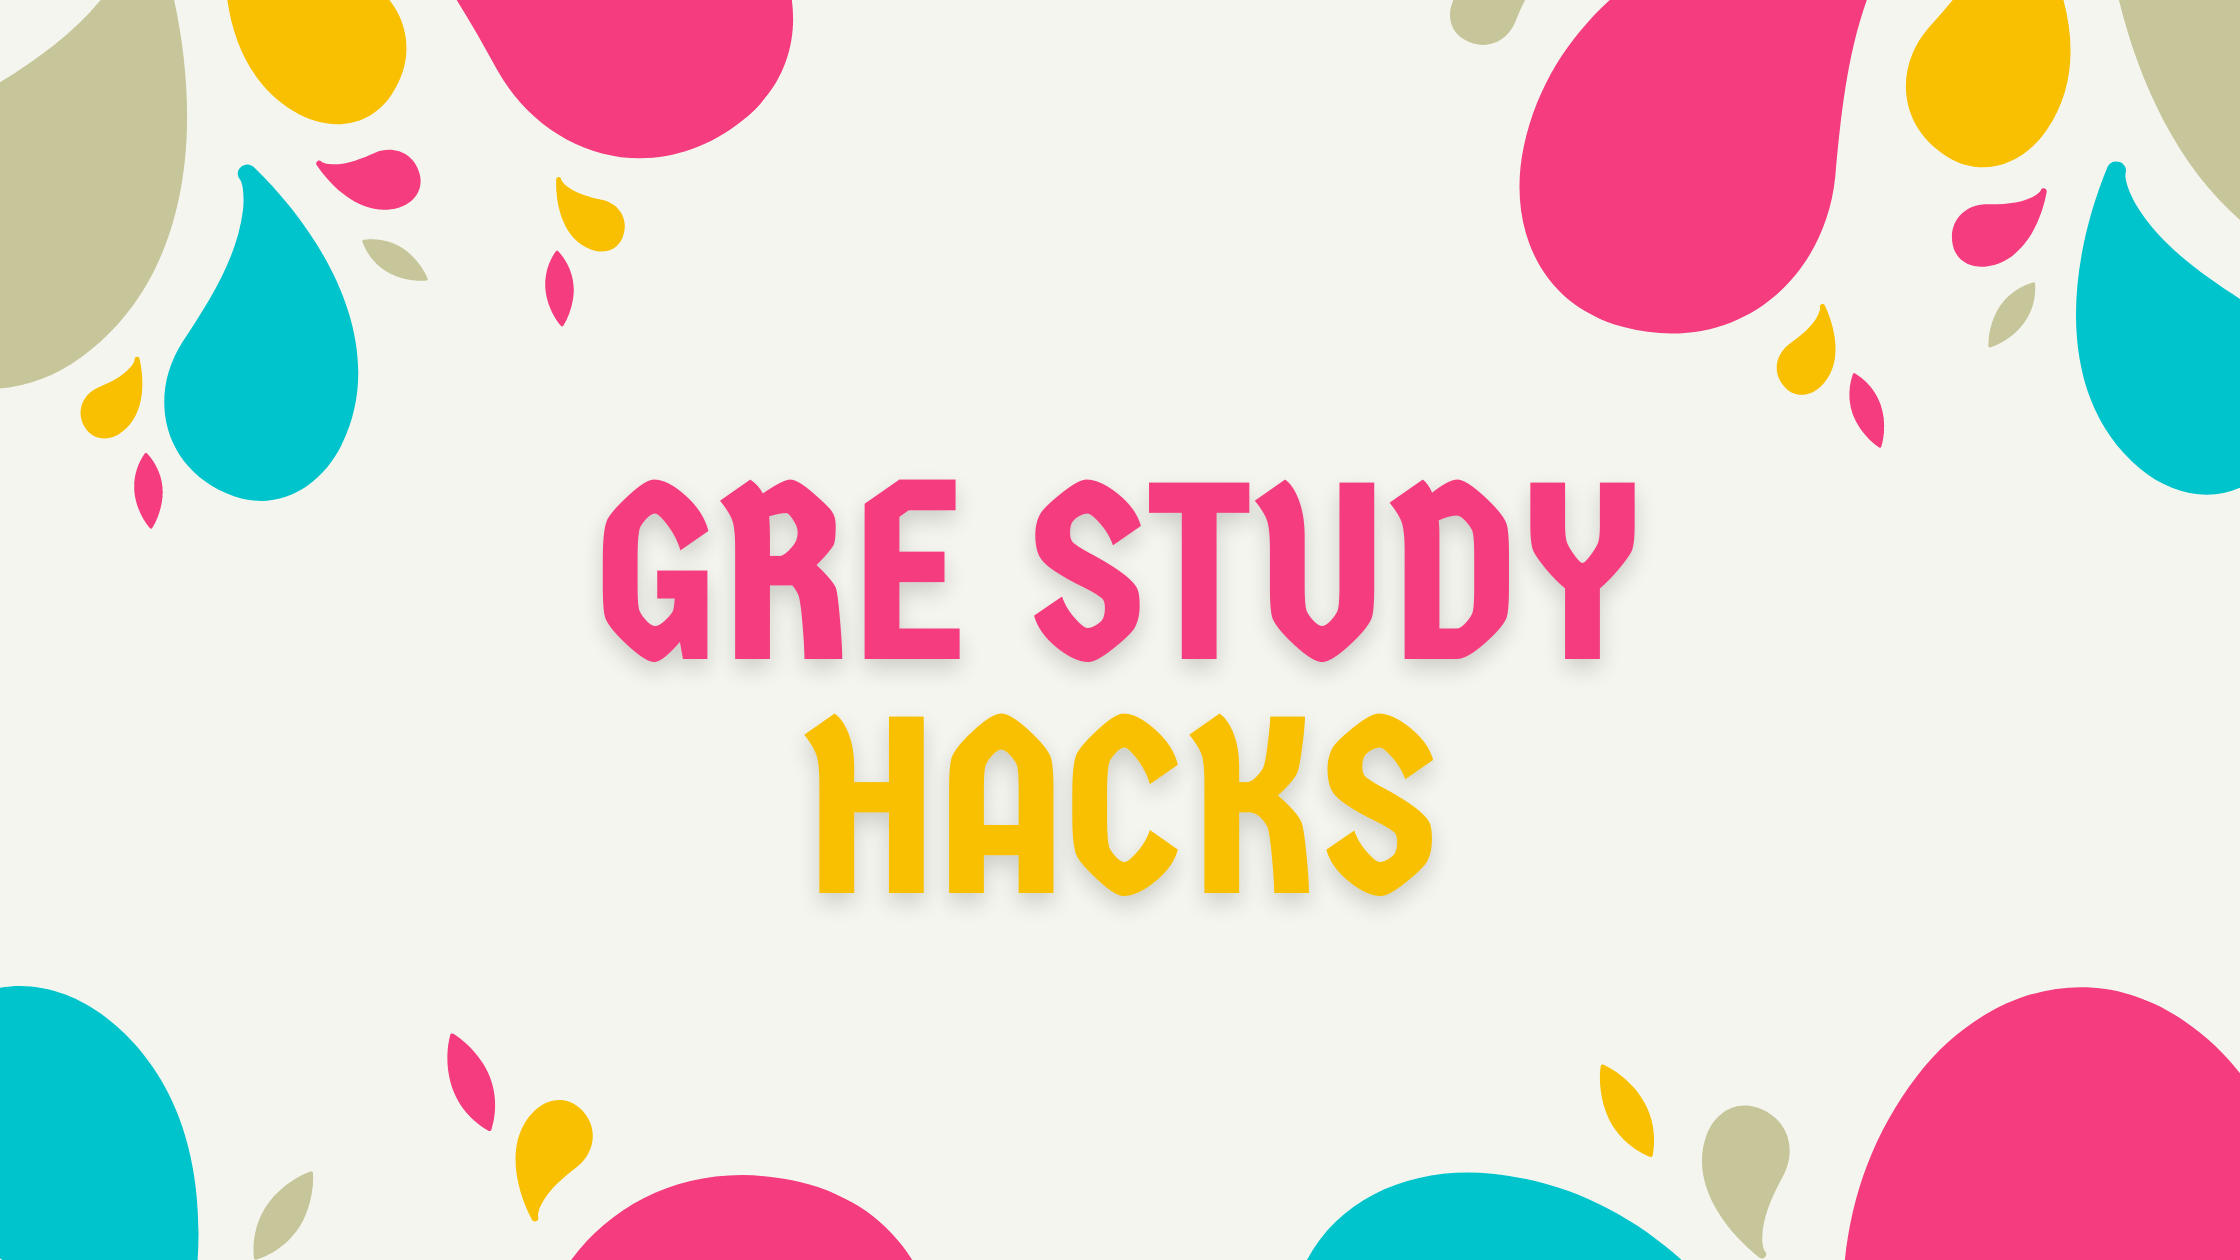 Study Hacks For GRE Preparation